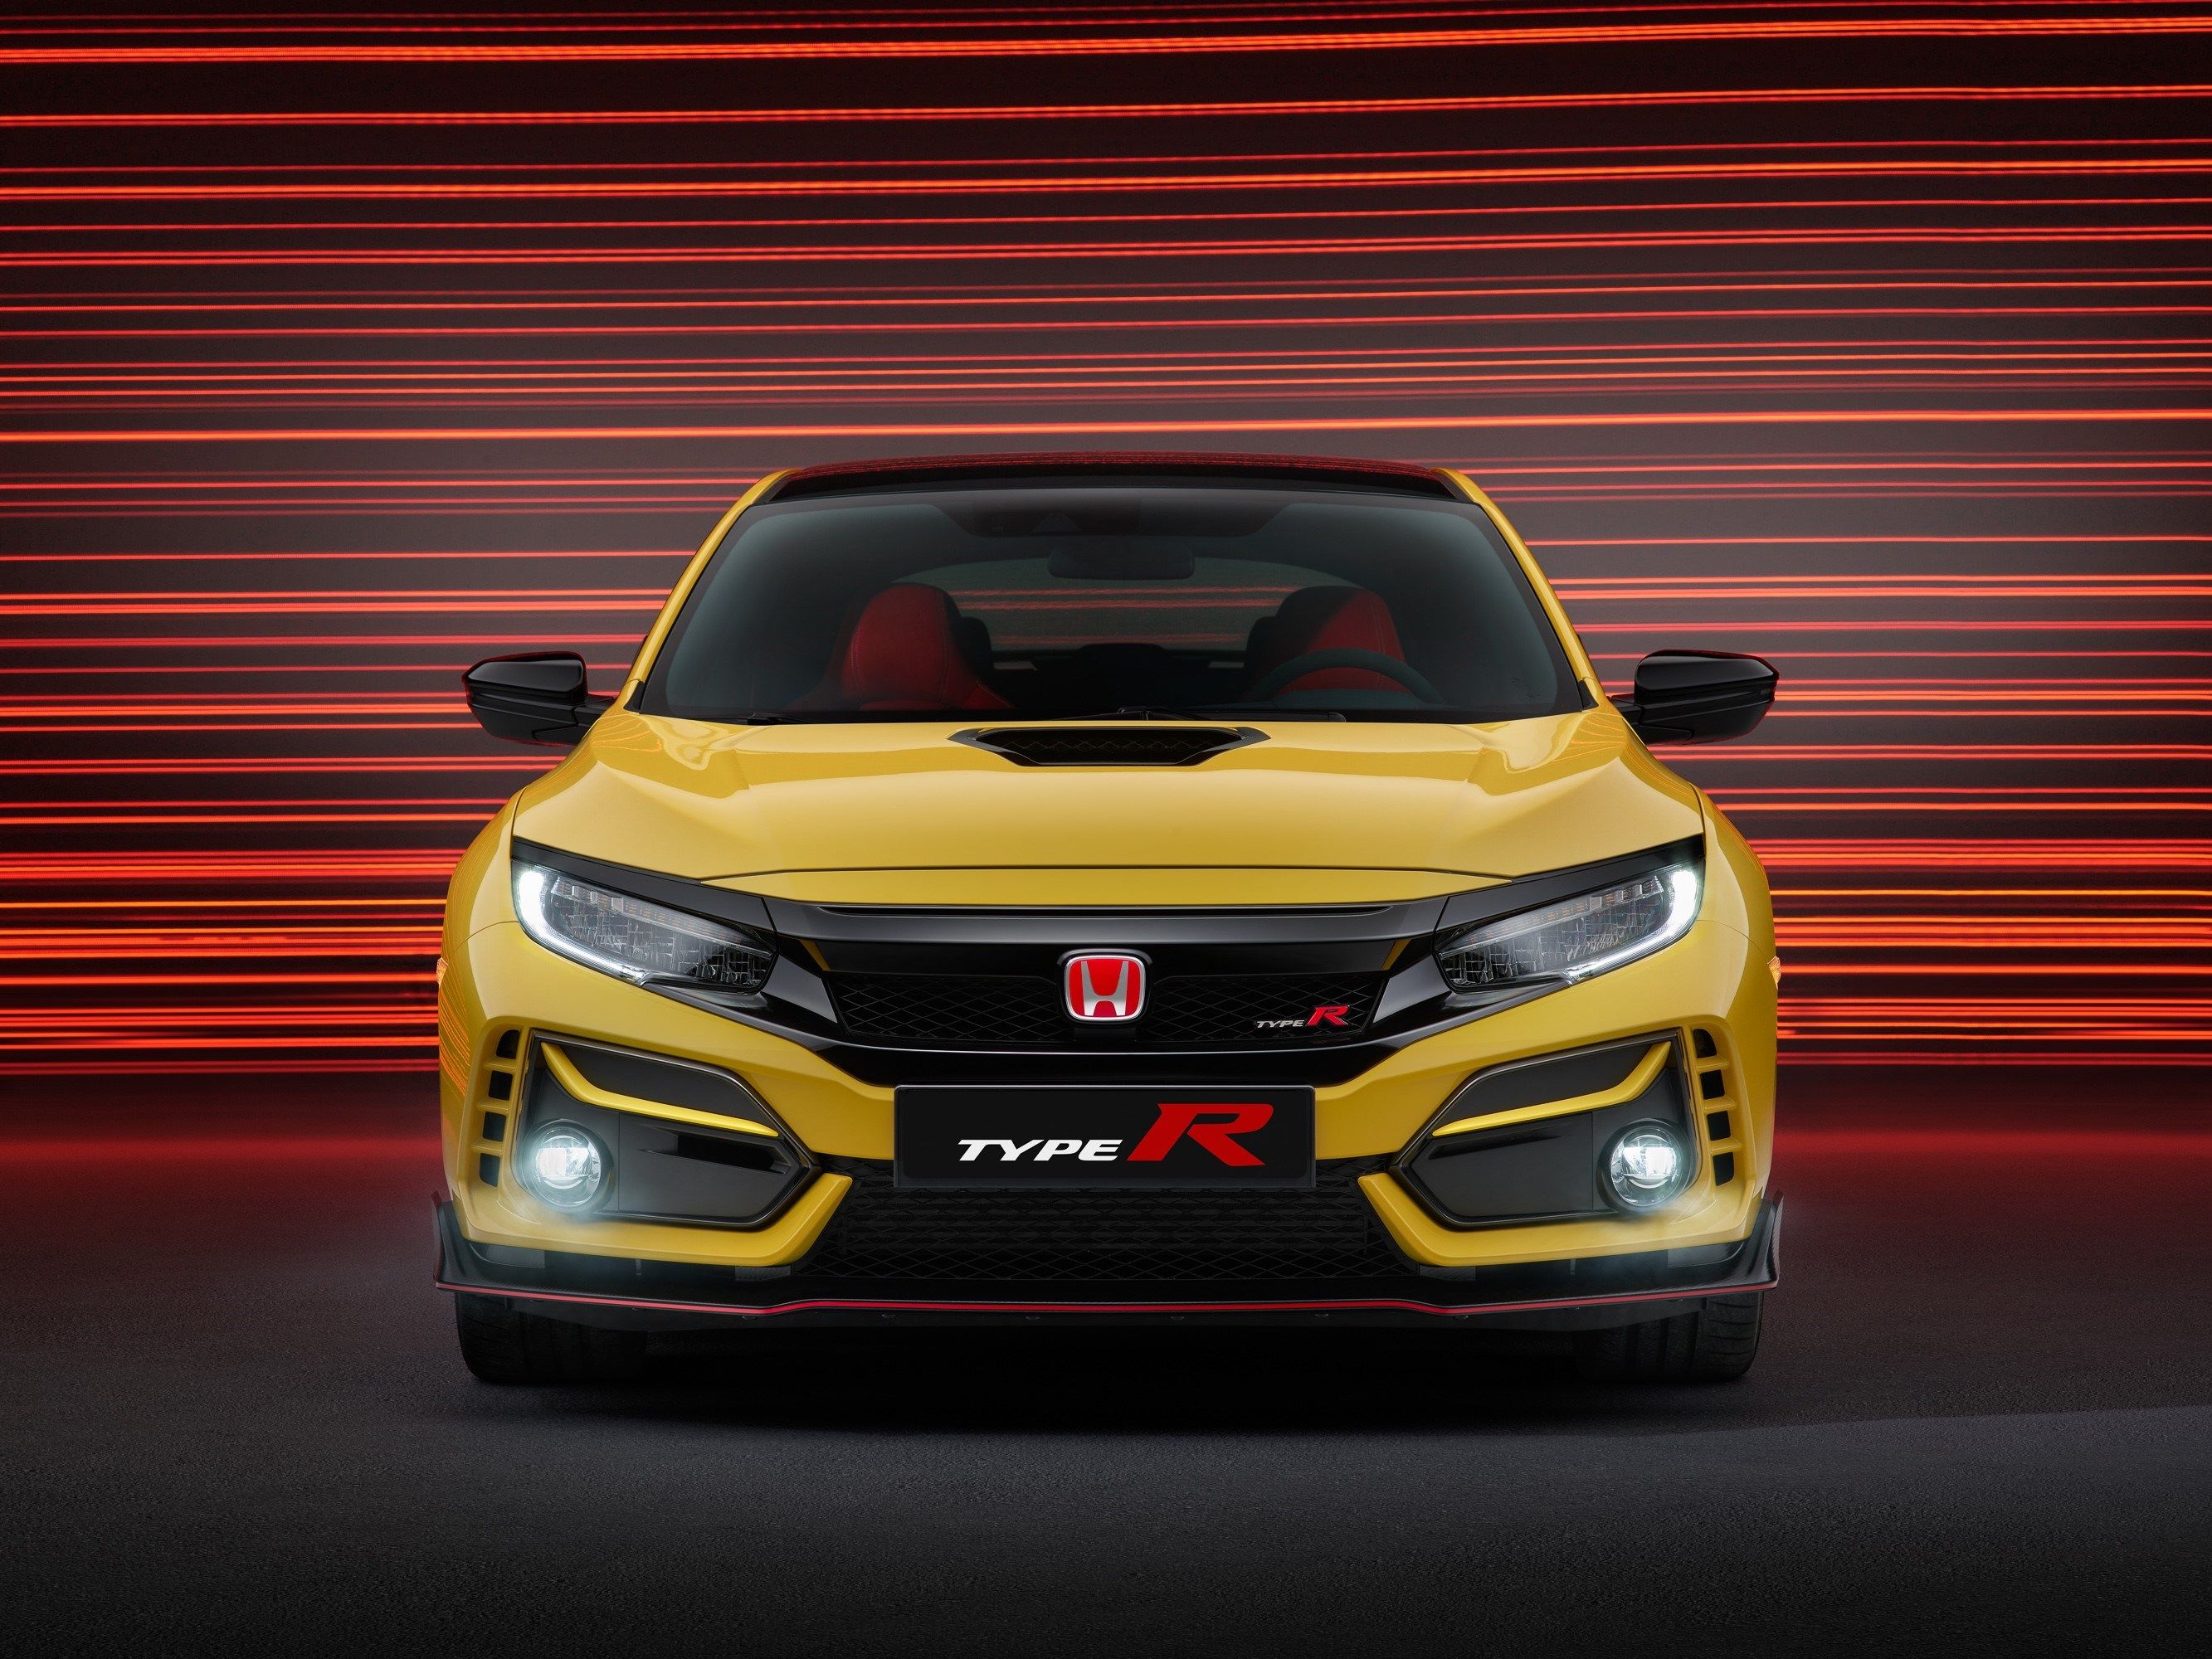 2021 Honda Civic Type R Limited Edition interior Photo Gallery